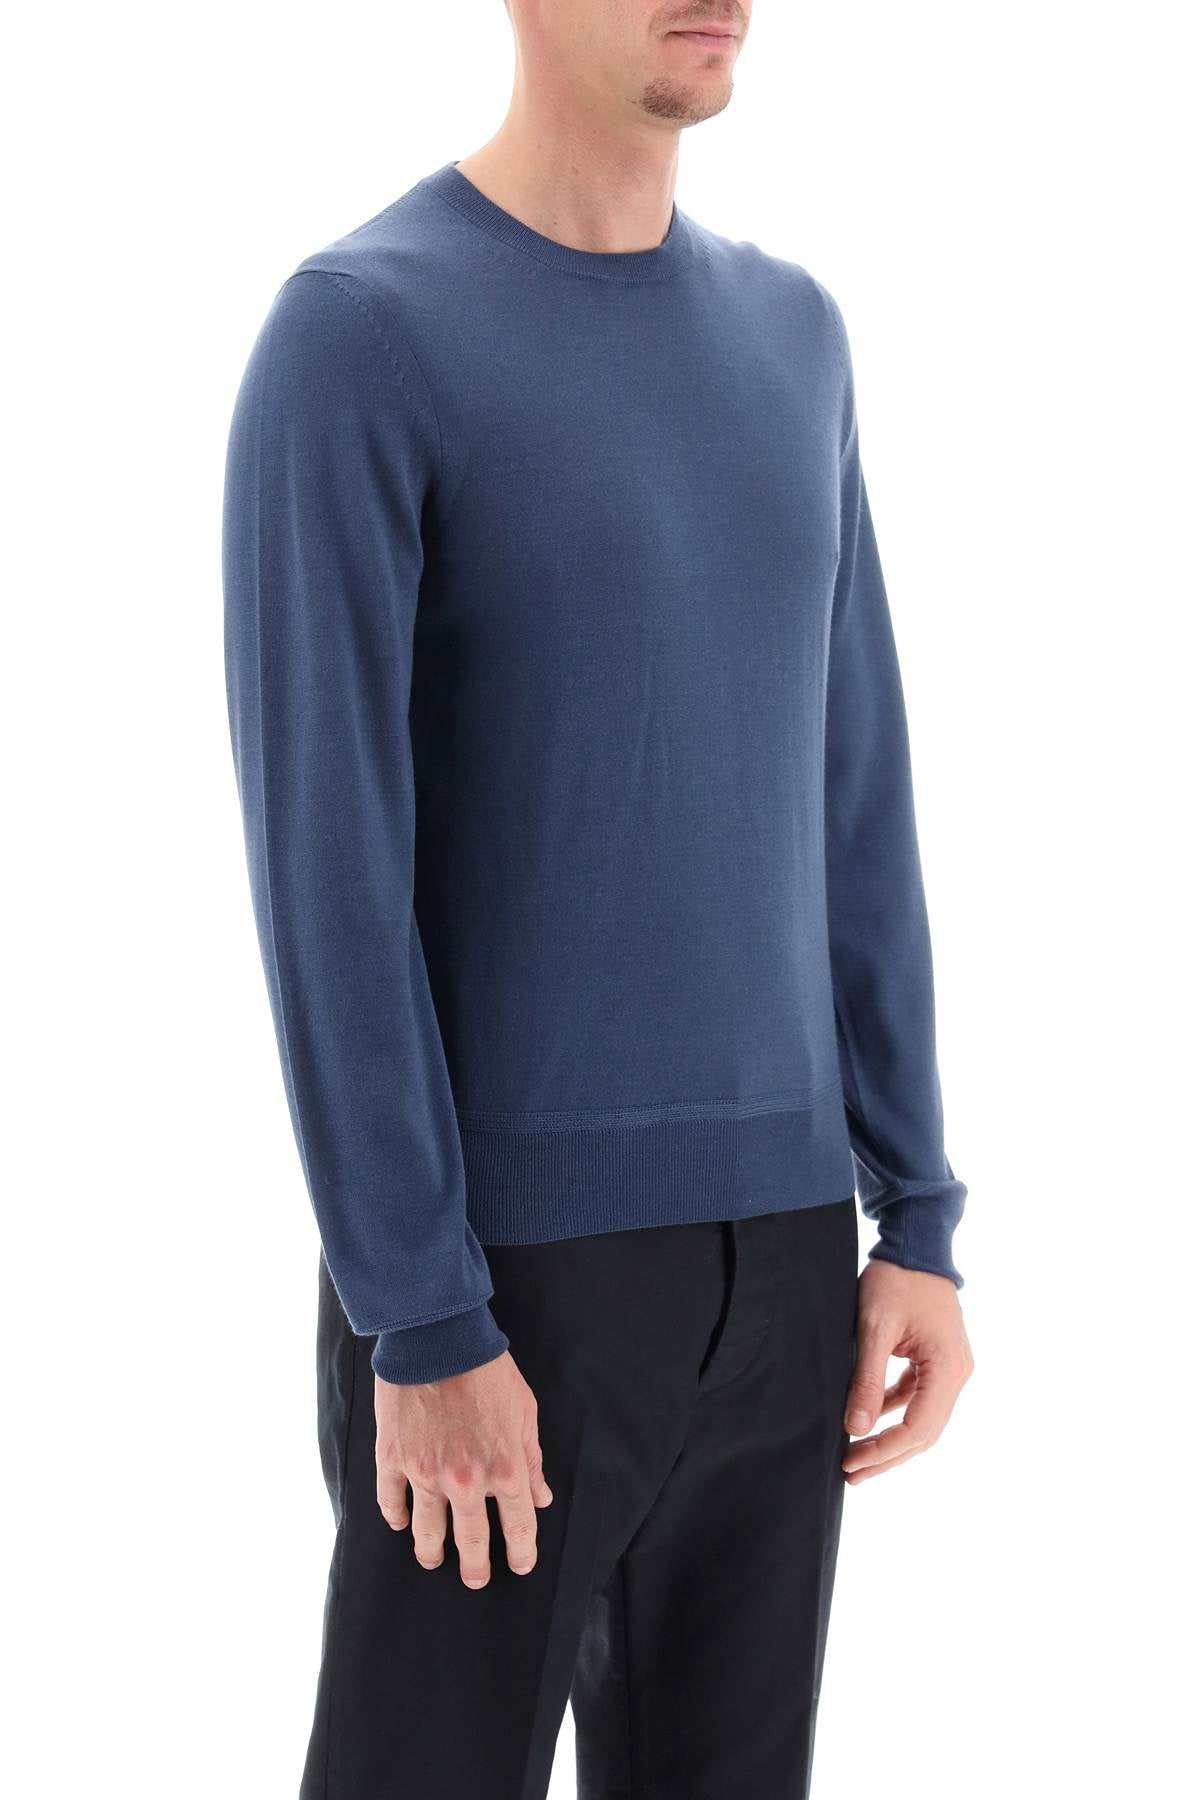 Tom Ford Tom ford light silk-cashmere sweater